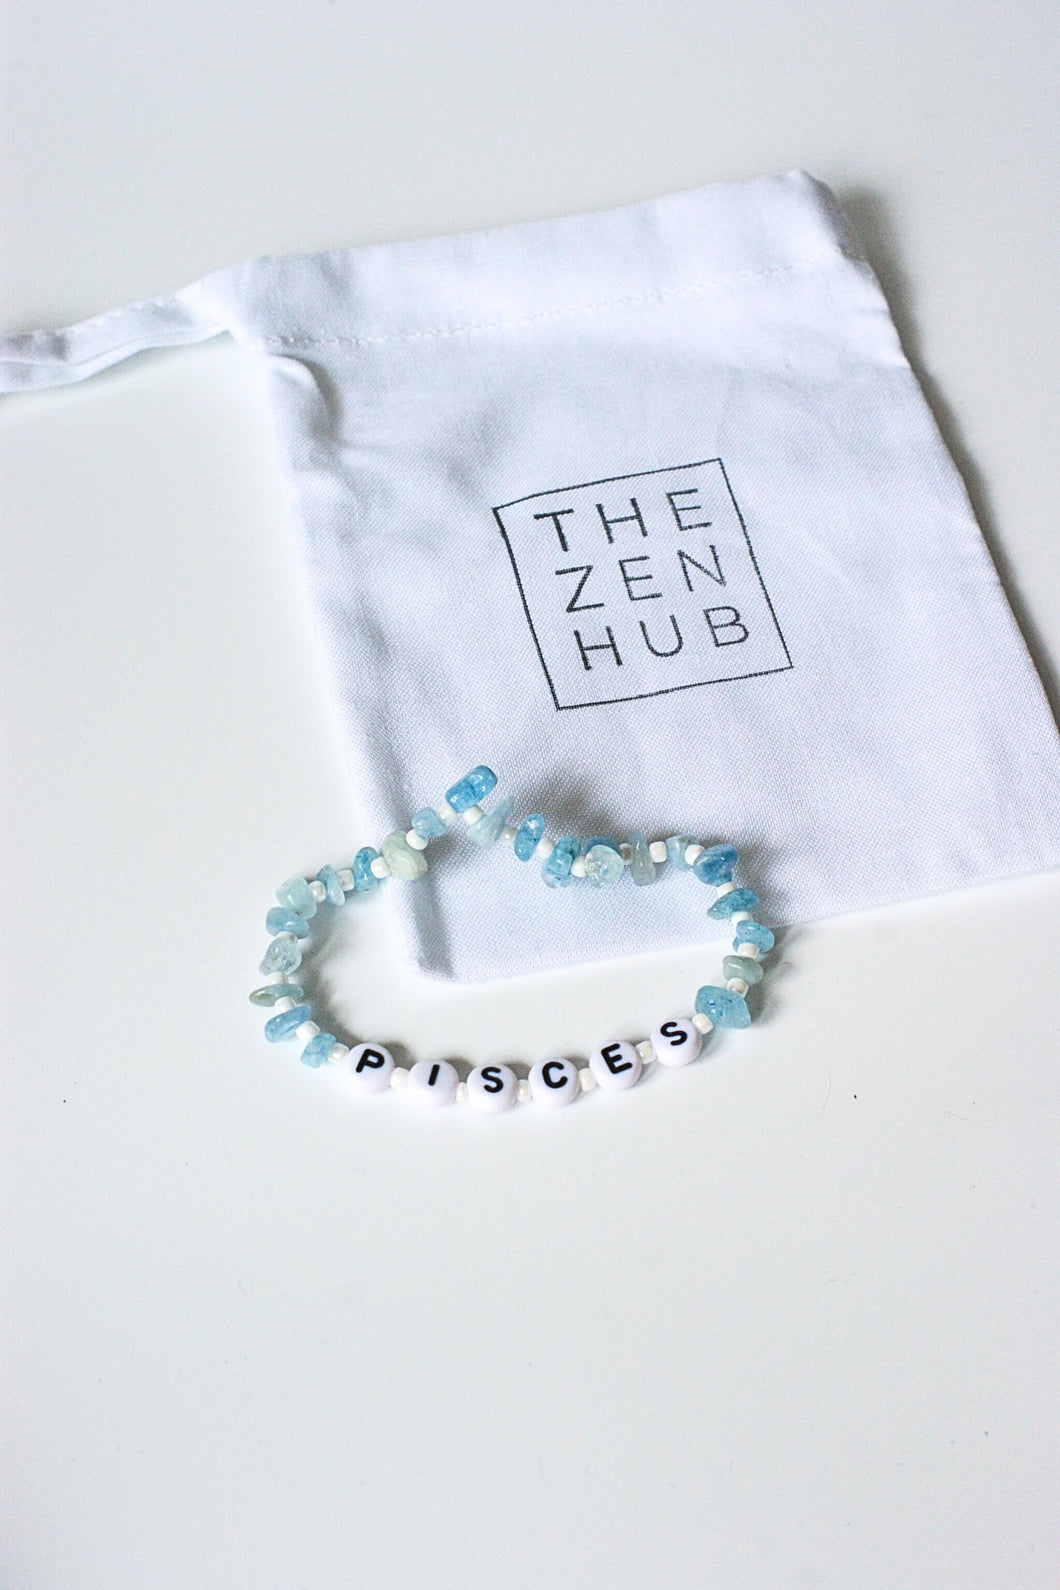 Pisces star sign crystal bracelet in aquamarine led on white cotton bag 